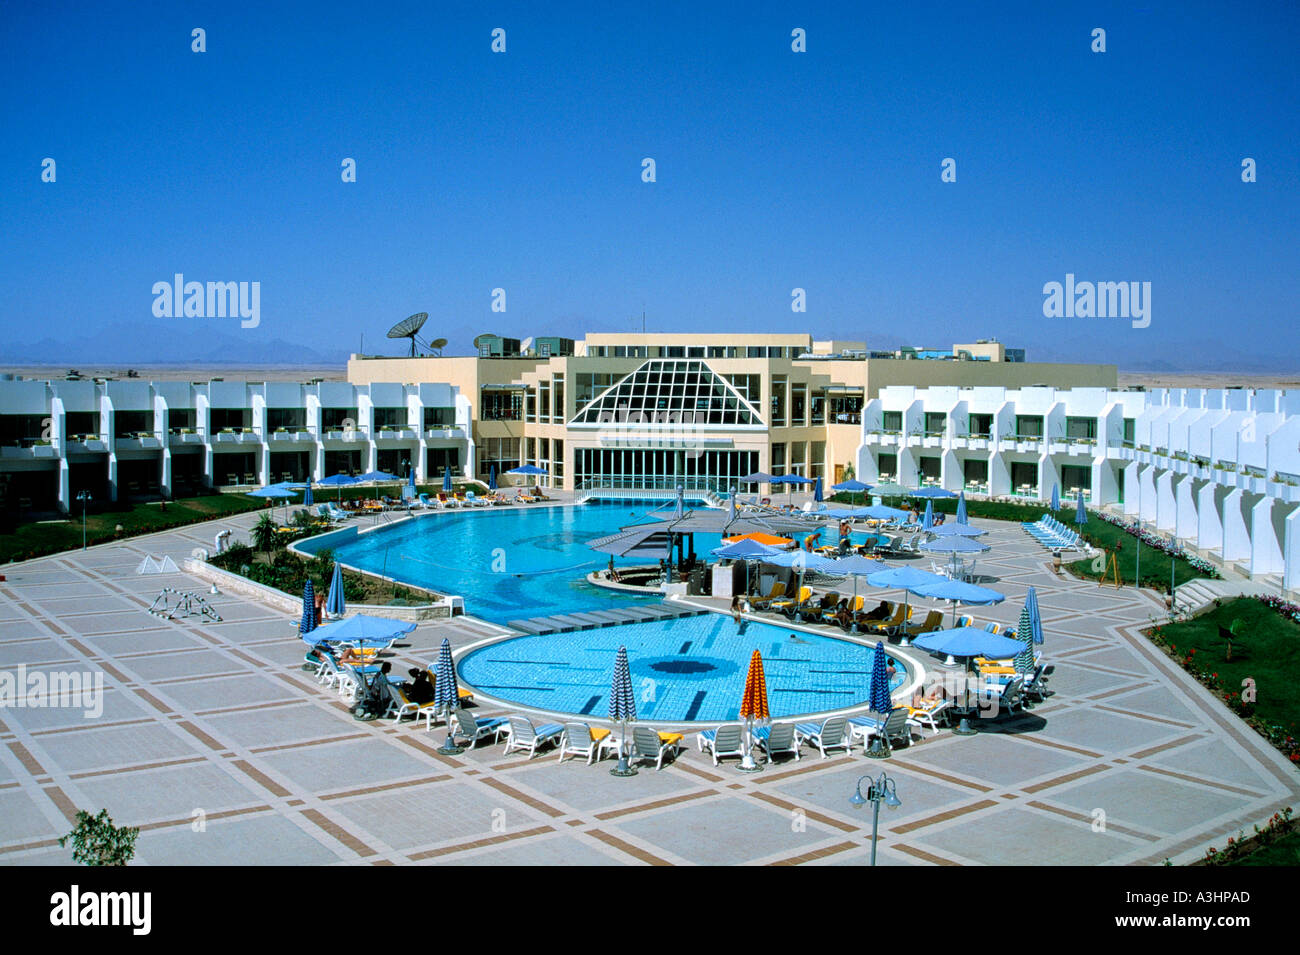 swimmingpool of hotel hilton resort of hurghada egypt editorial use only Stock Photo